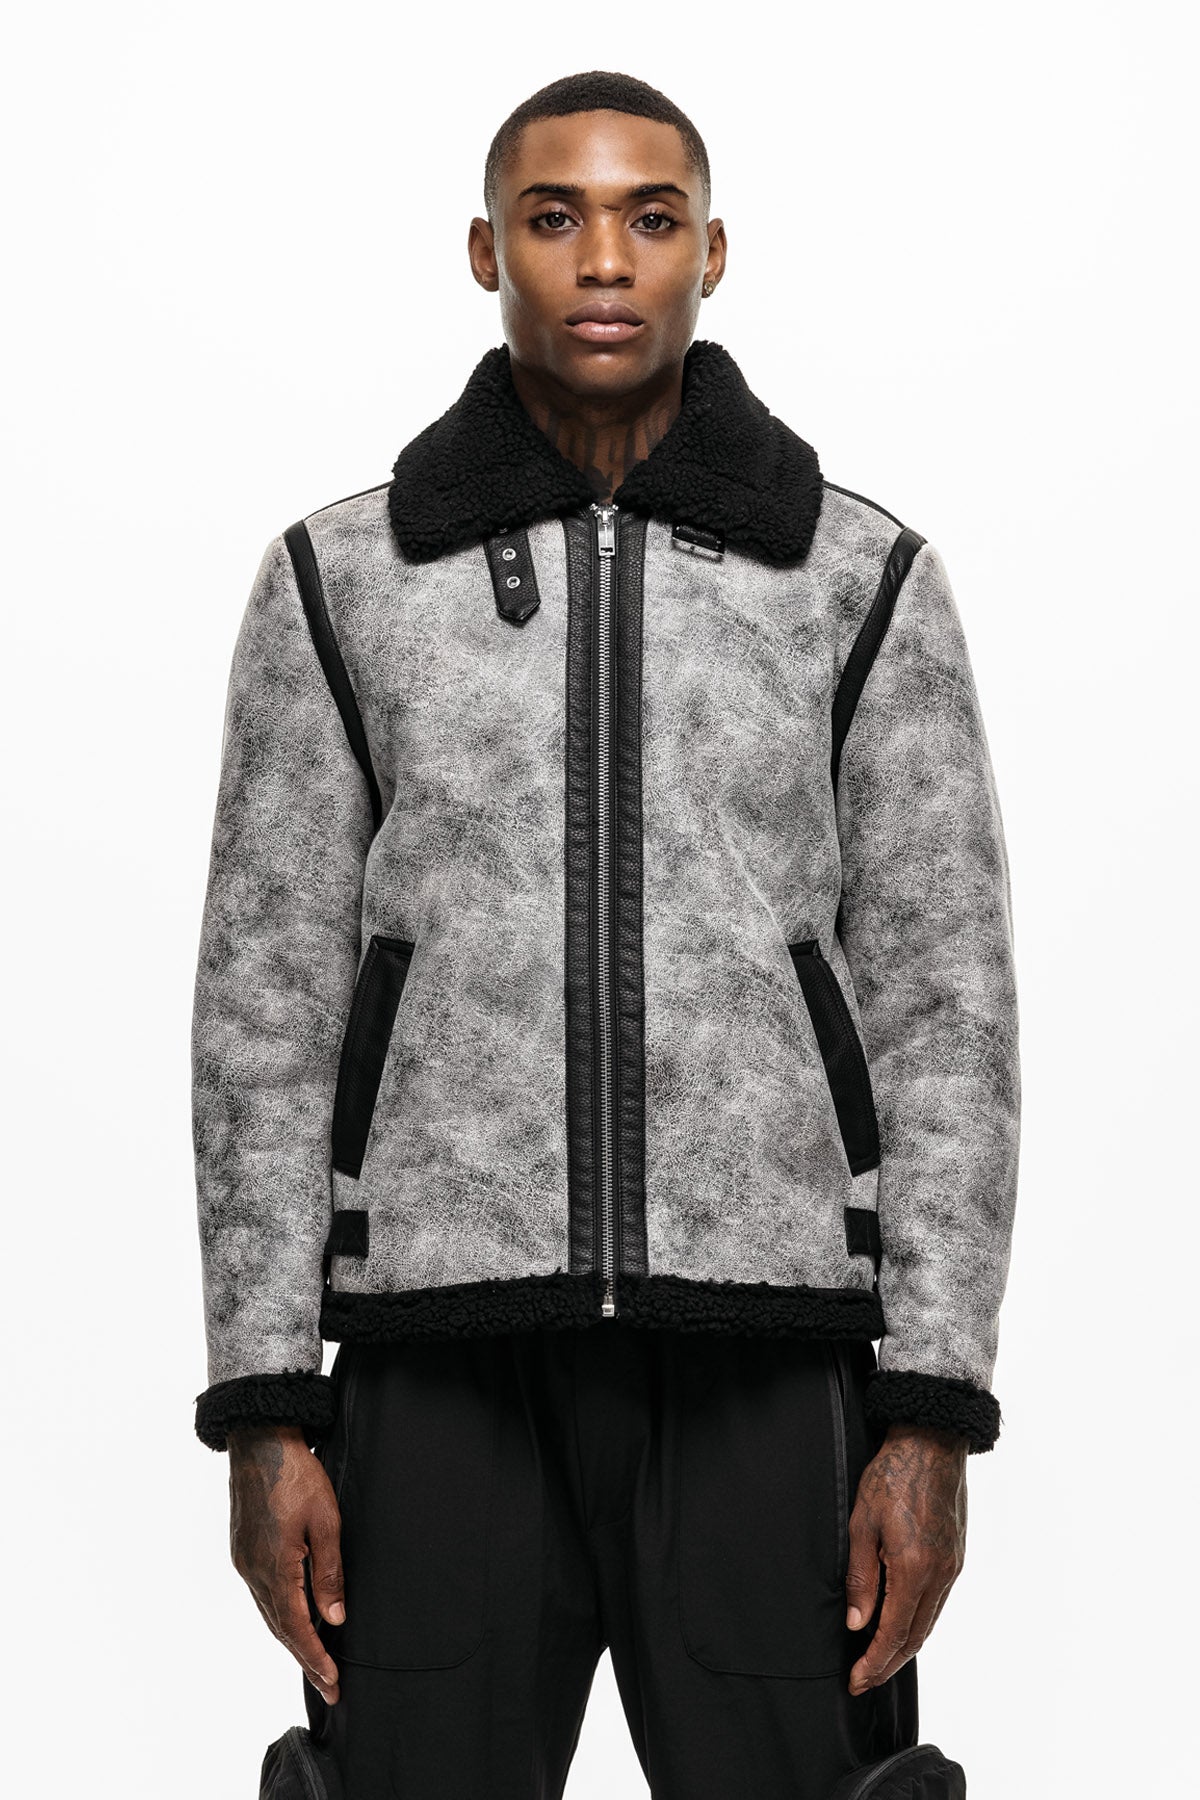 Premium Shearling Grey Jacket